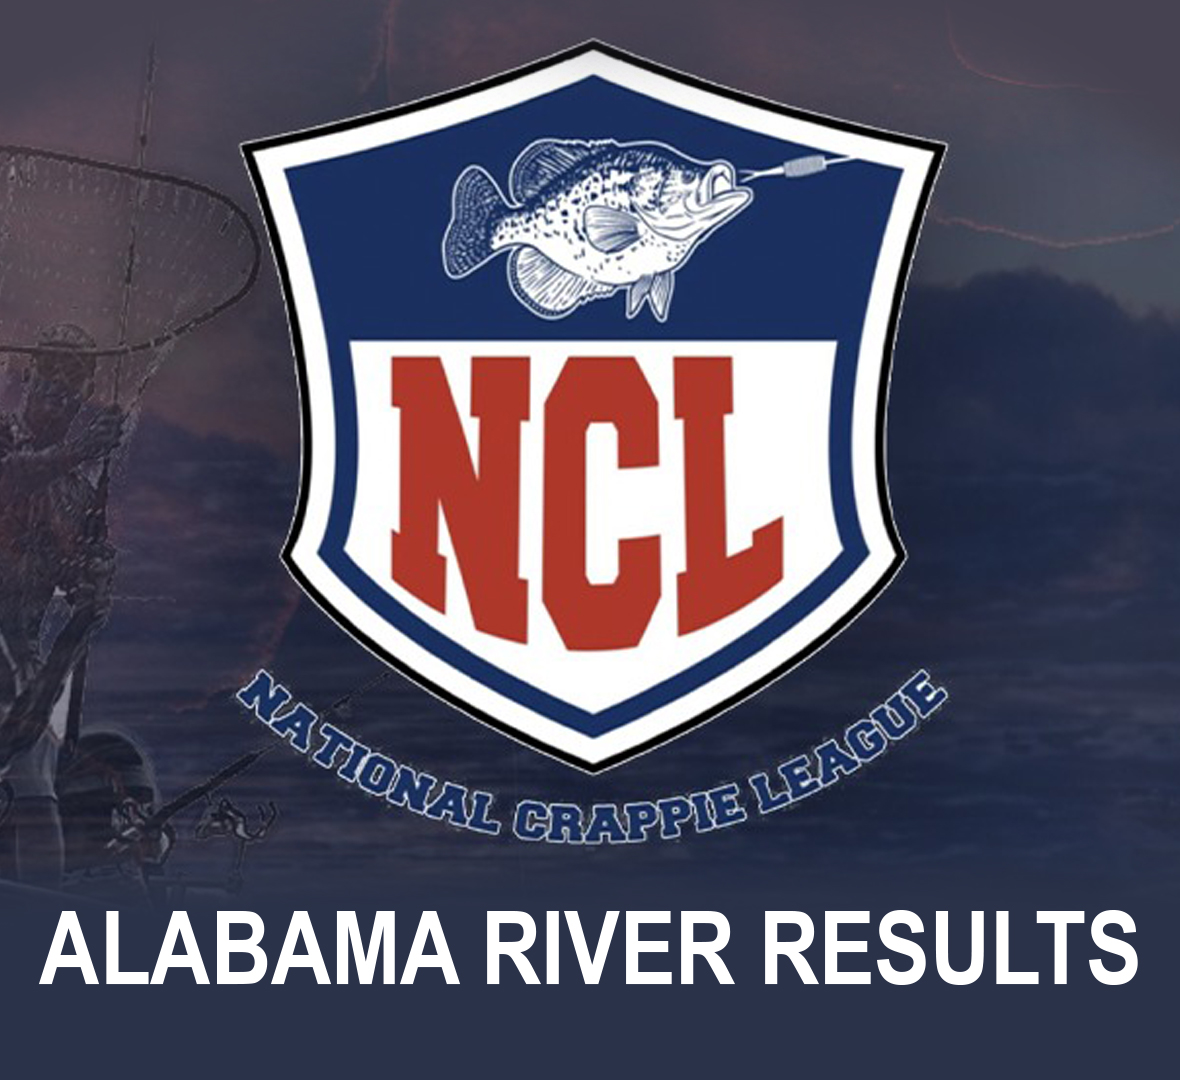 NCL alabama river results